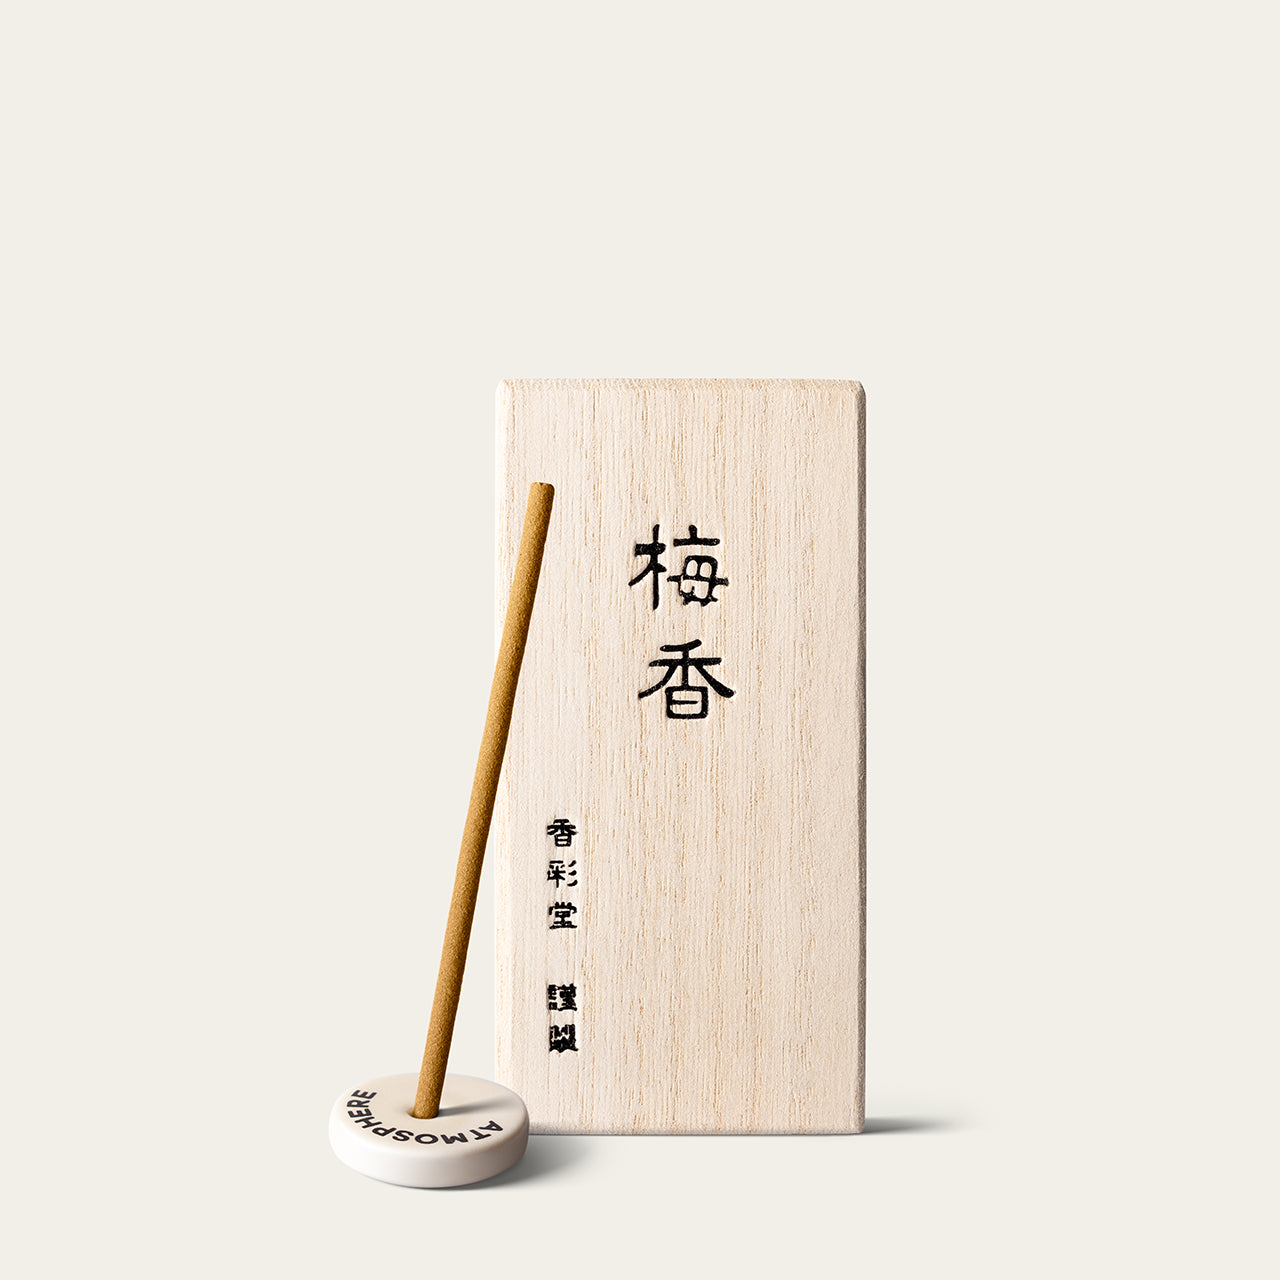 Kousaido Ancient City Plum Umeka Japanese incense sticks (30 sticks) with Atmosphere ceramic incense holder